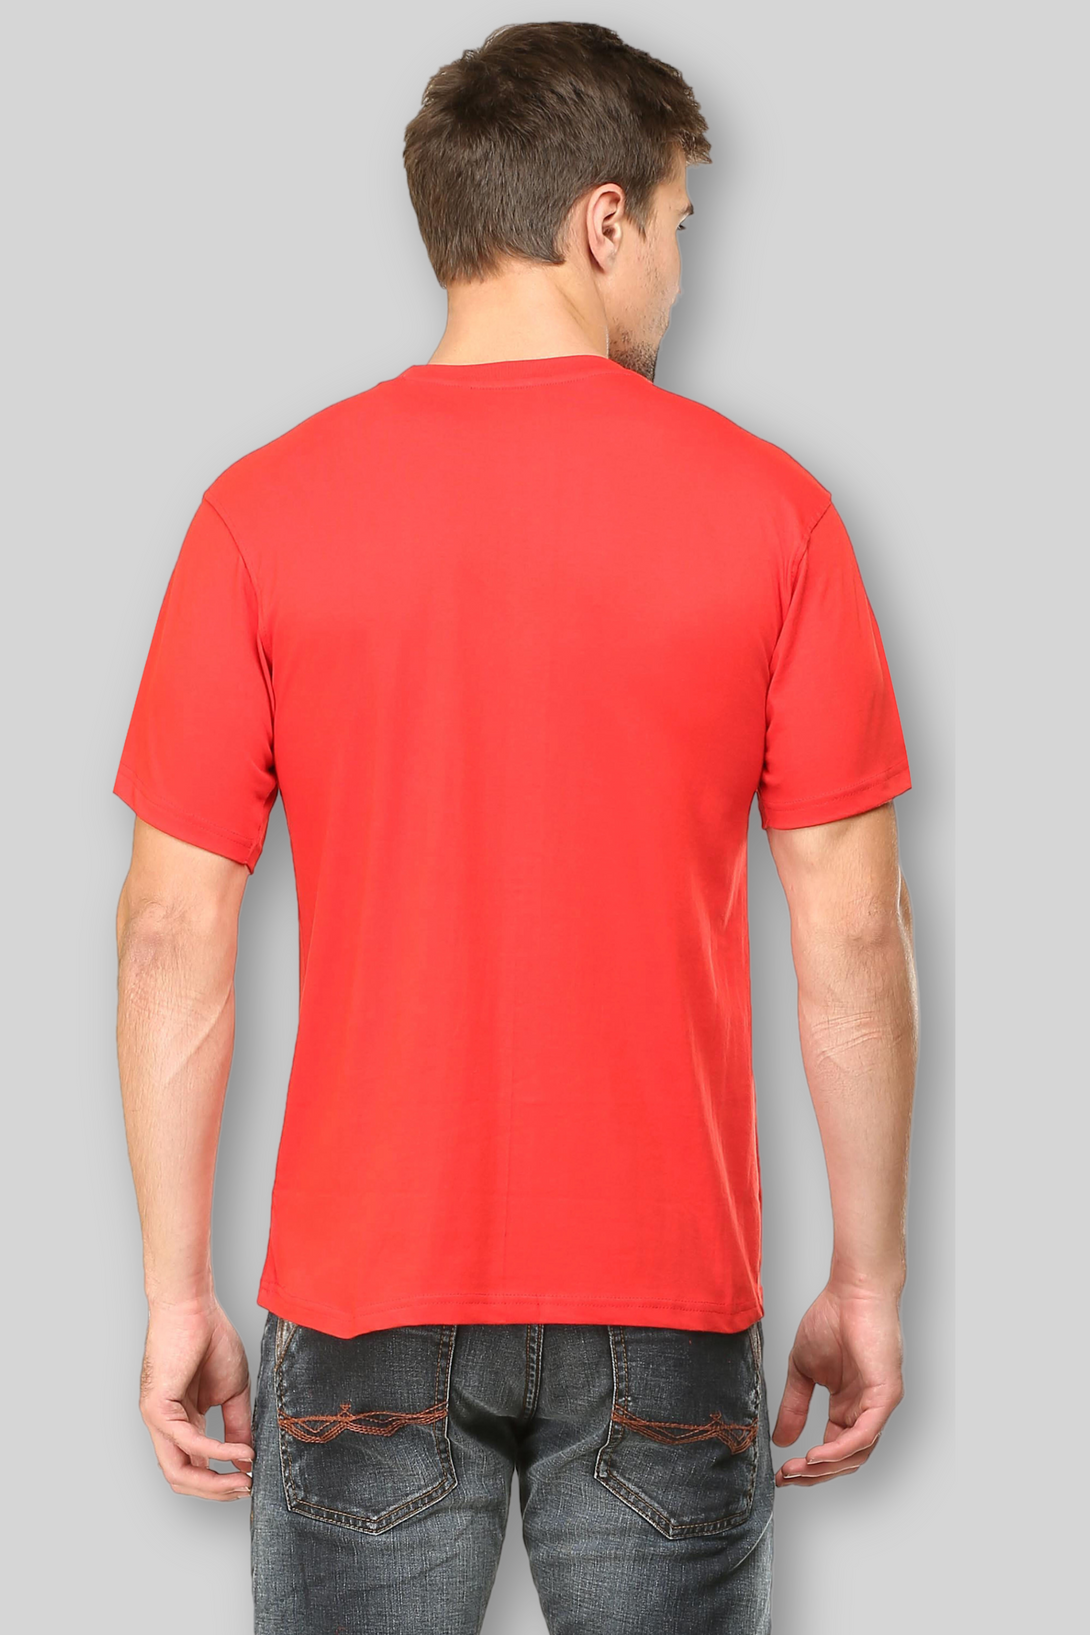 Red T-Shirt For Men - WowWaves - 5